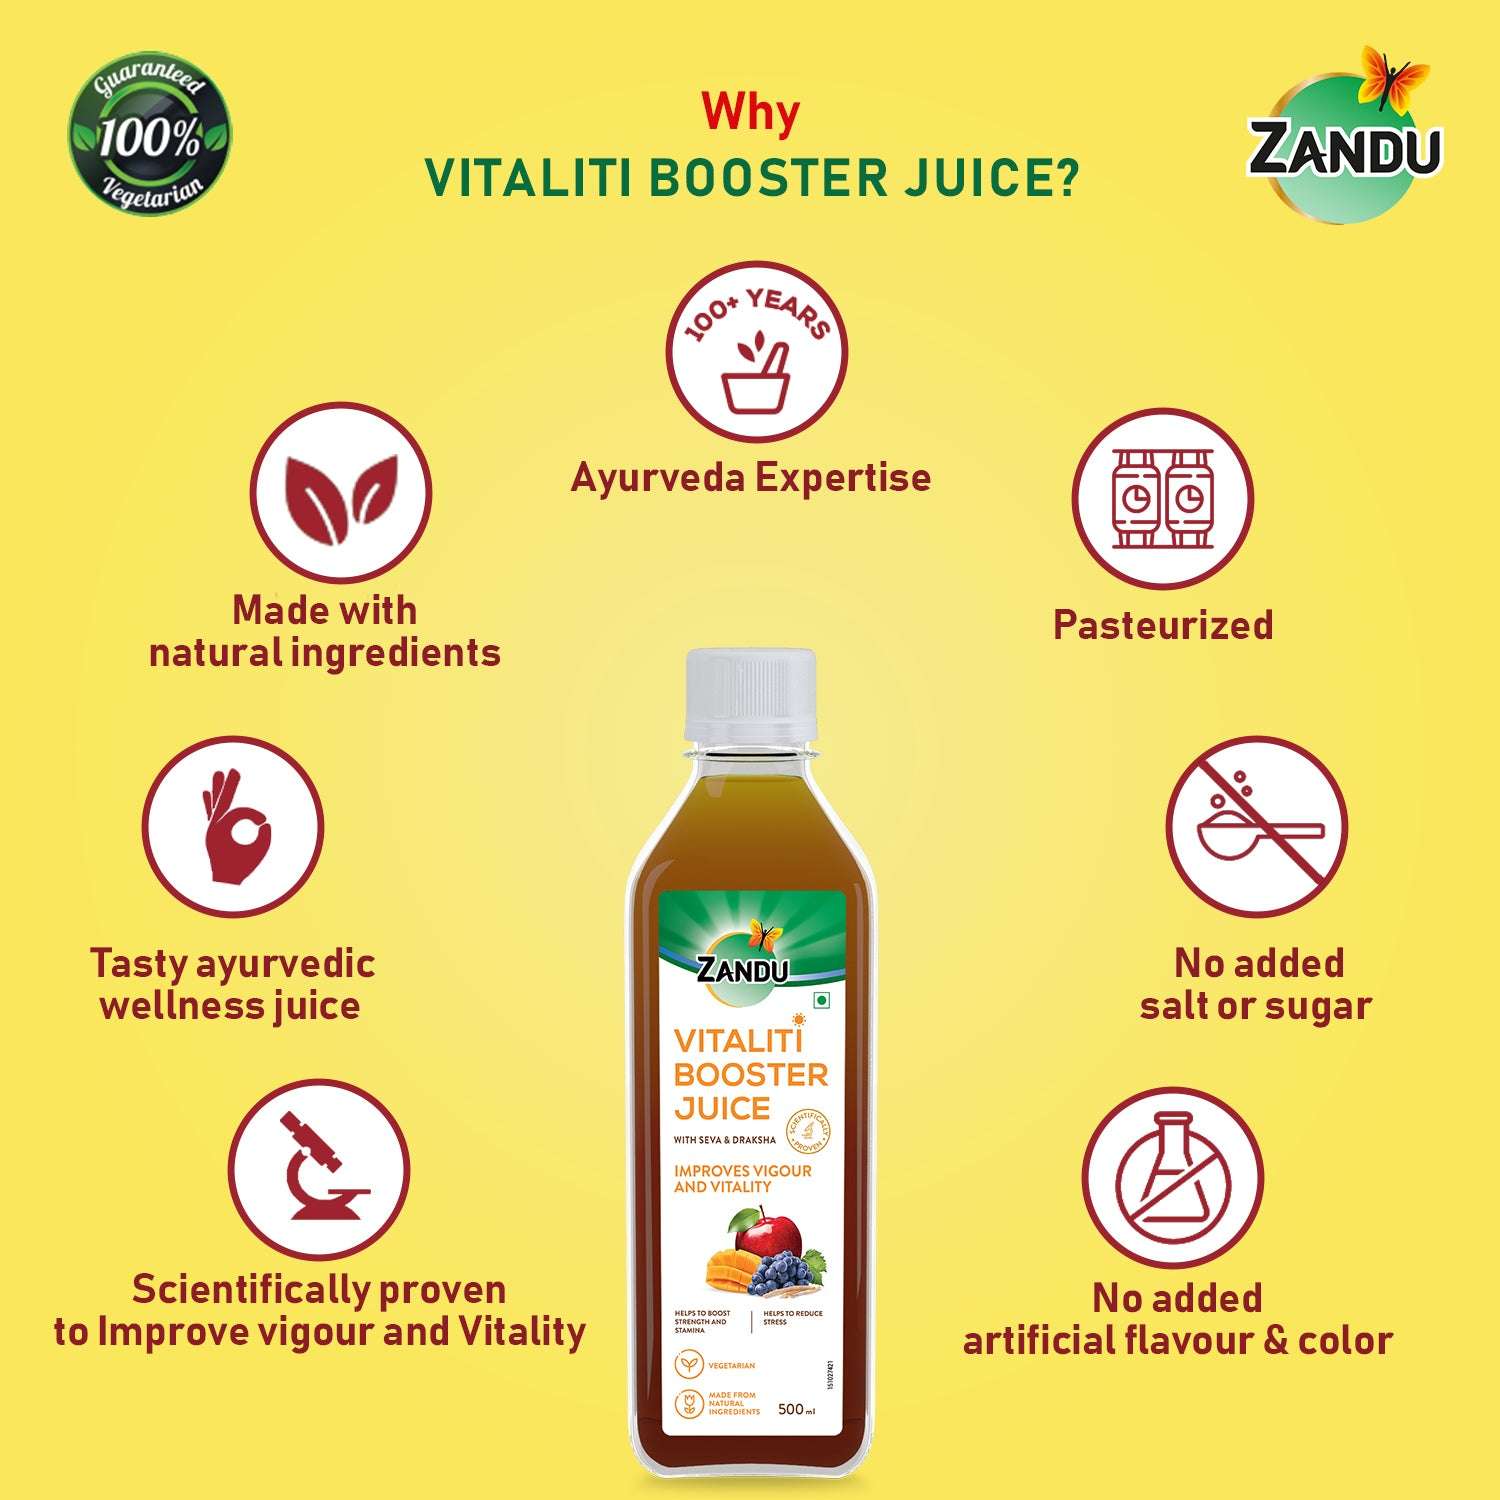 Zandu Vitality Booster Juice